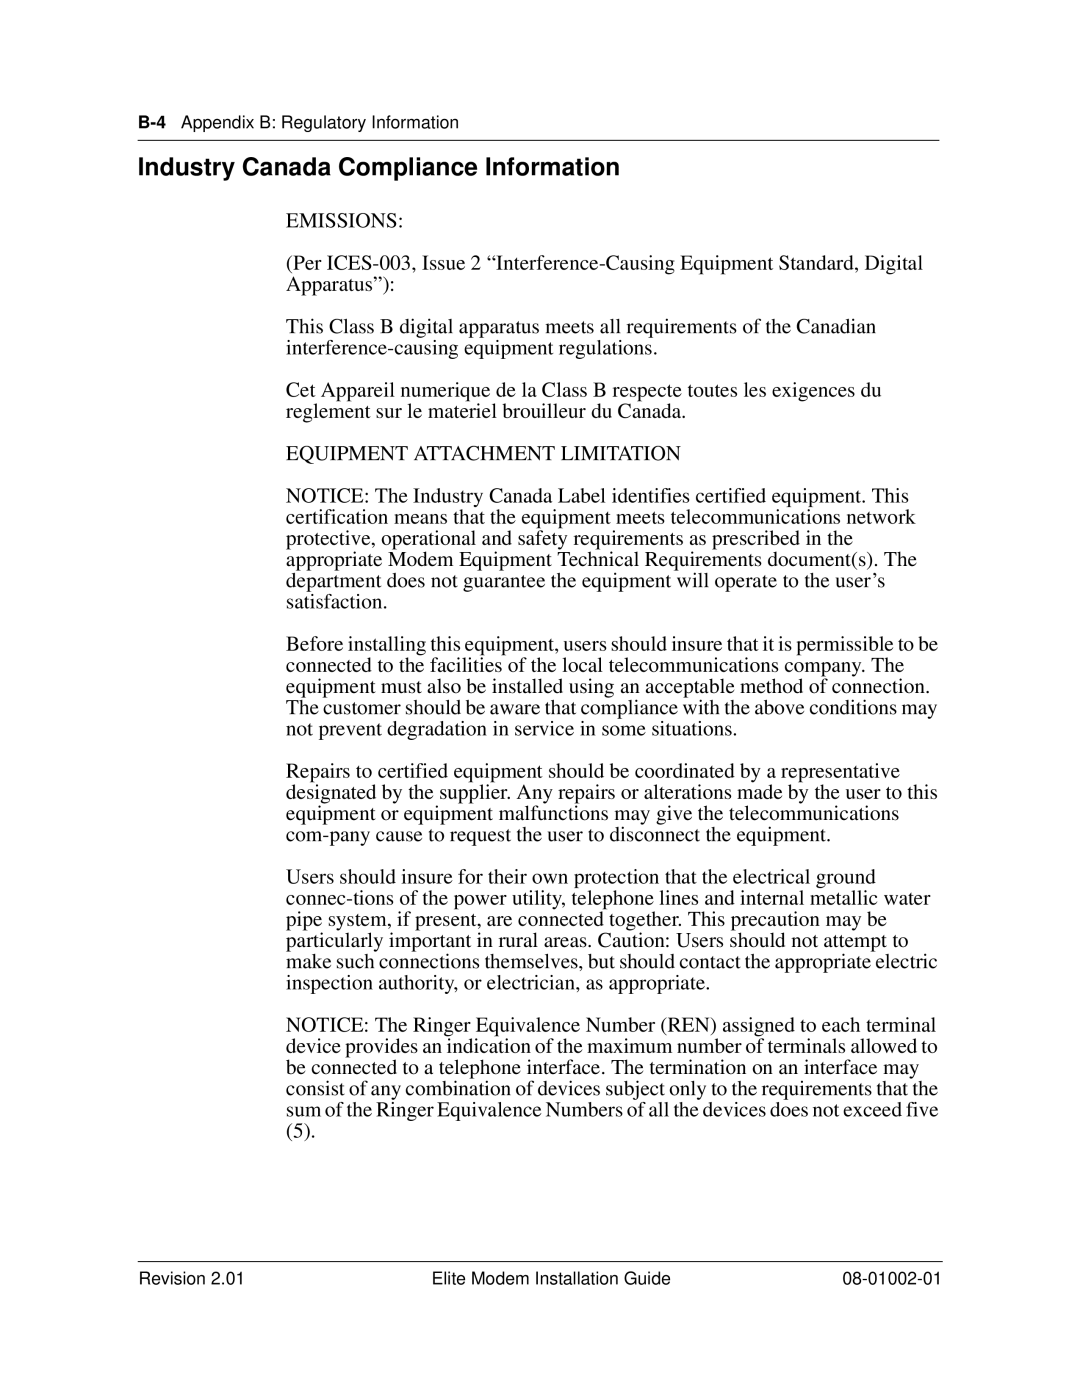 Zhone Technologies 08-01002-01 manual Industry Canada Compliance Information 